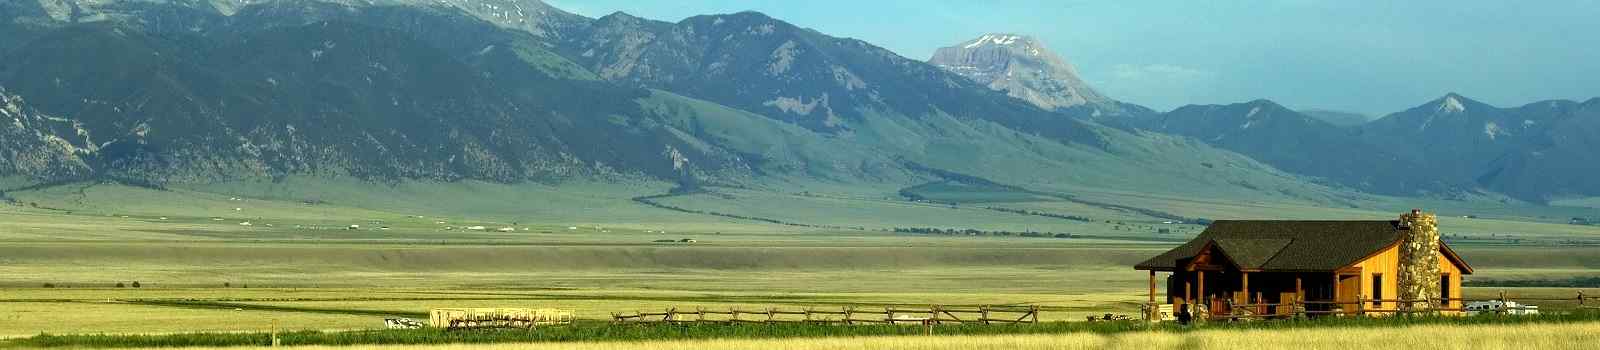 COWBOYS-INDIANER -Montana Farmhaus 12111220